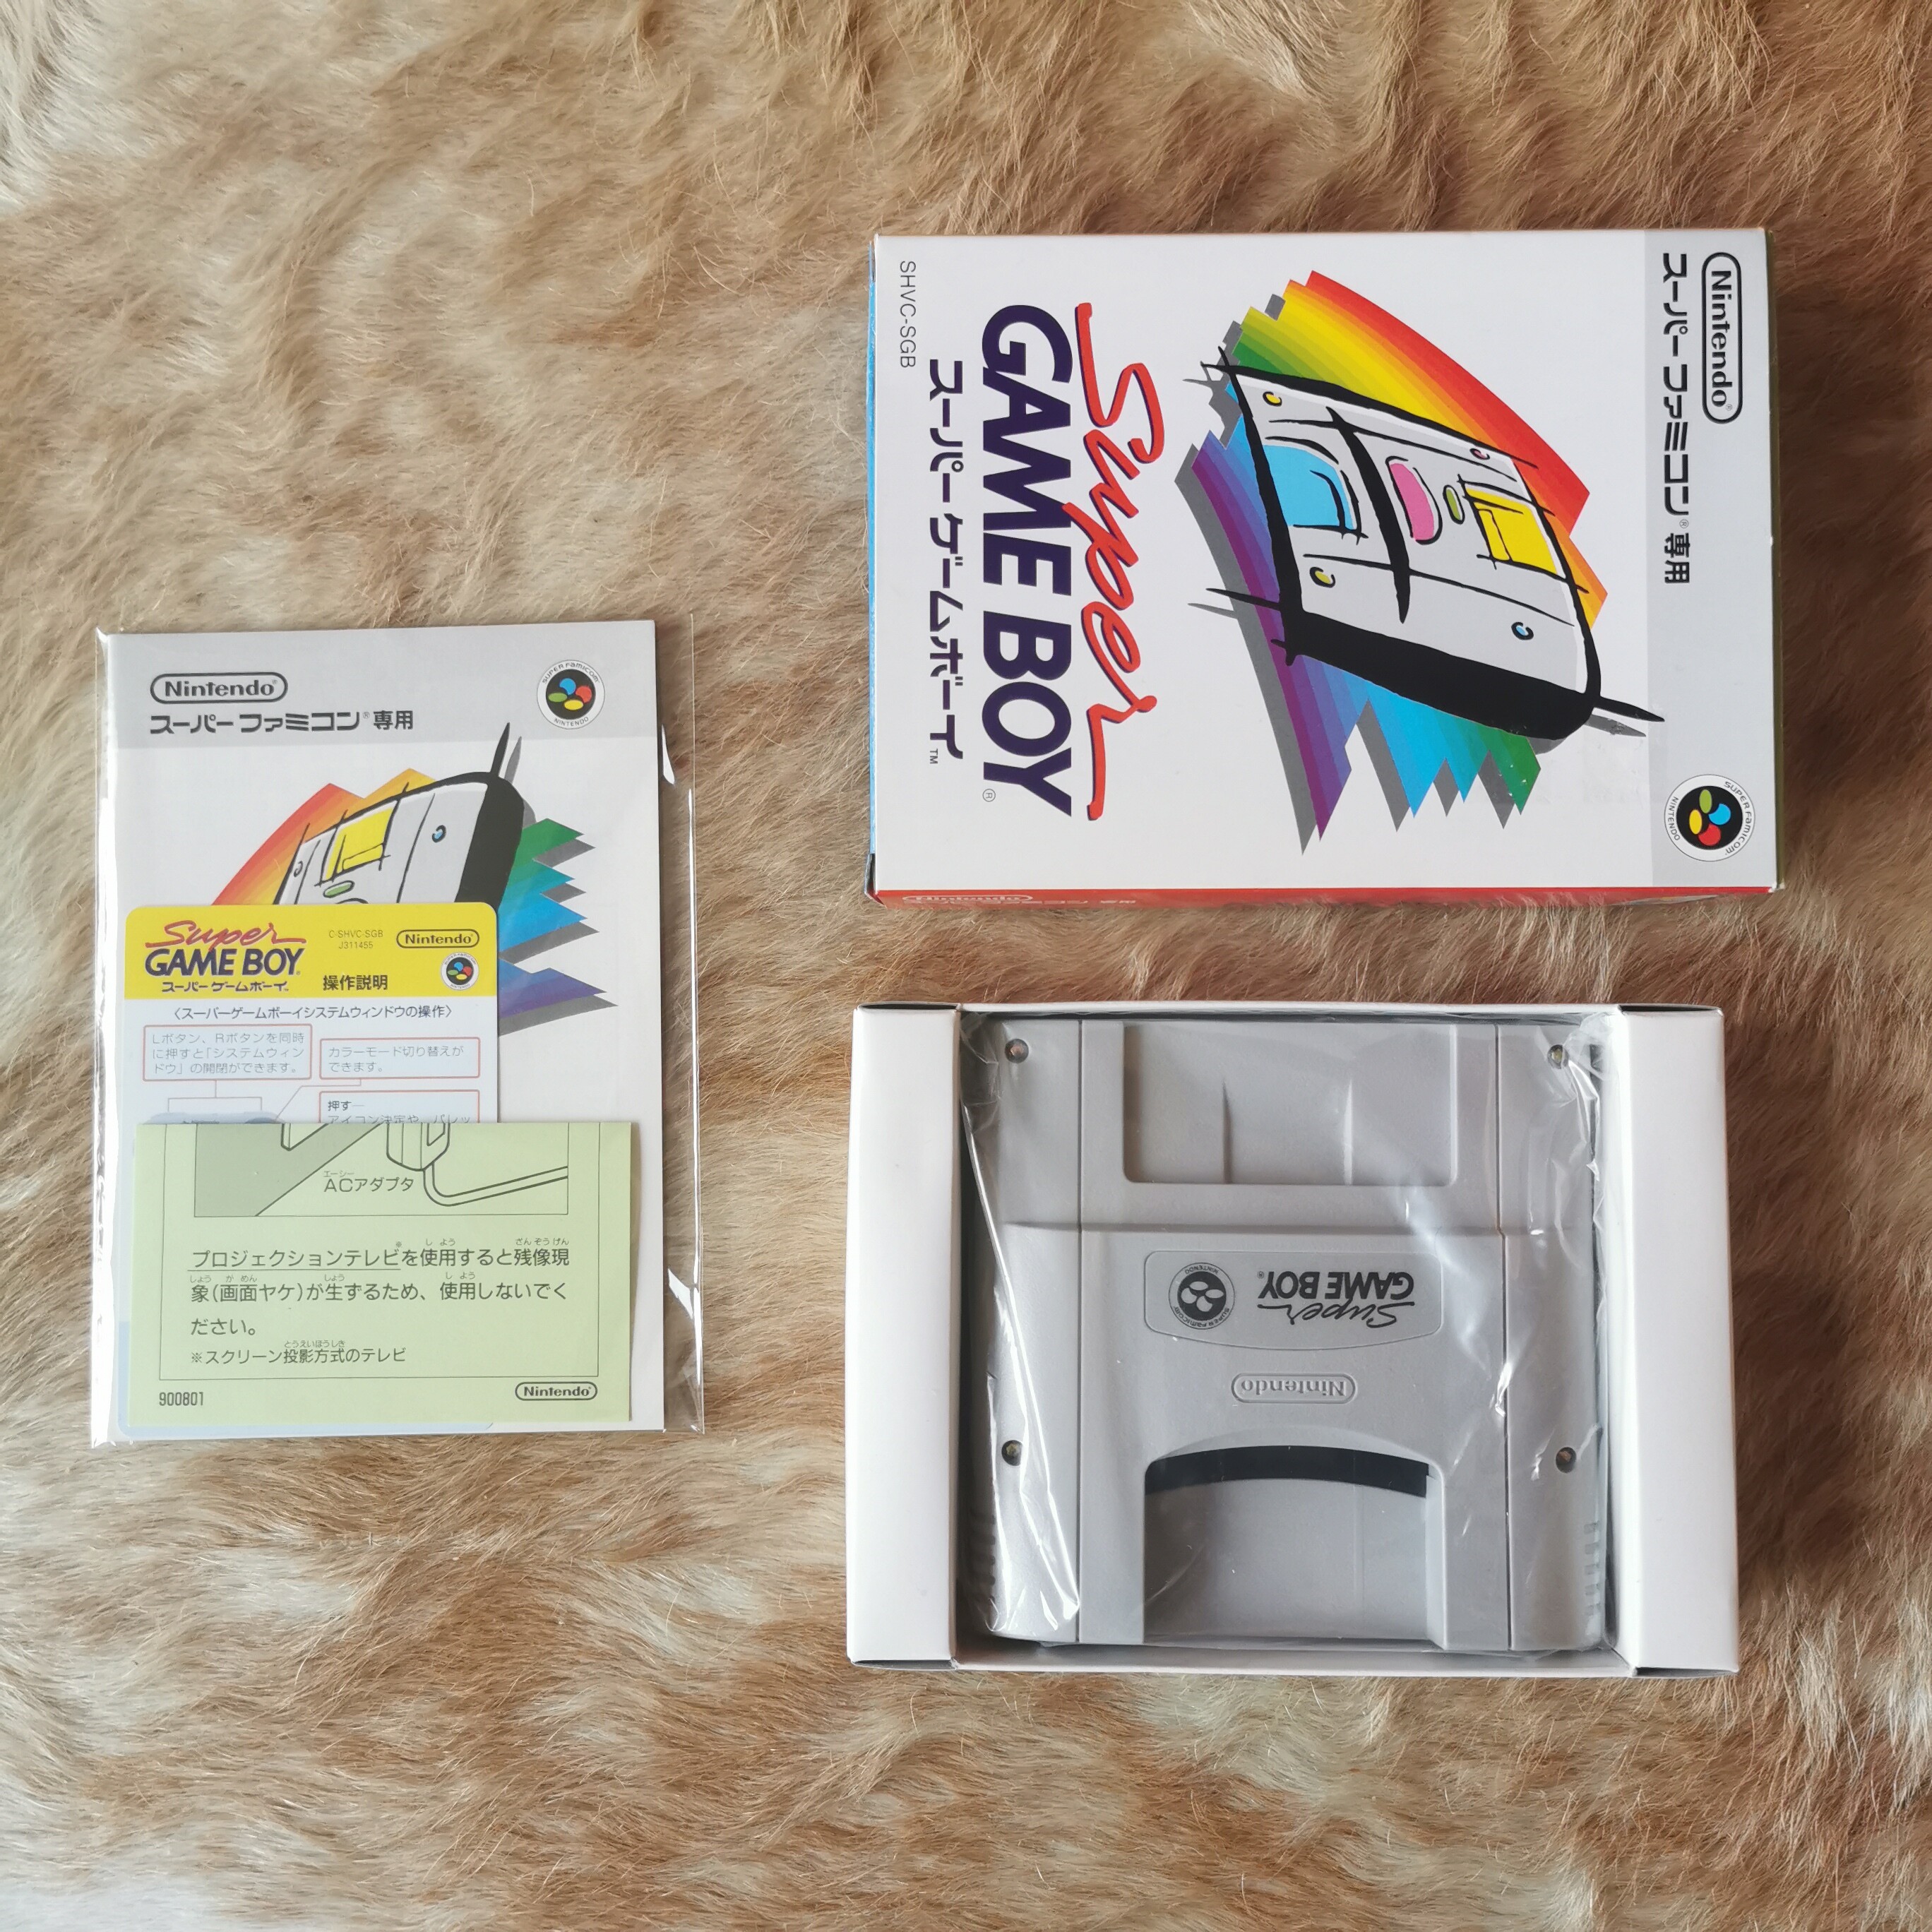  Super Famicom Super Game Boy